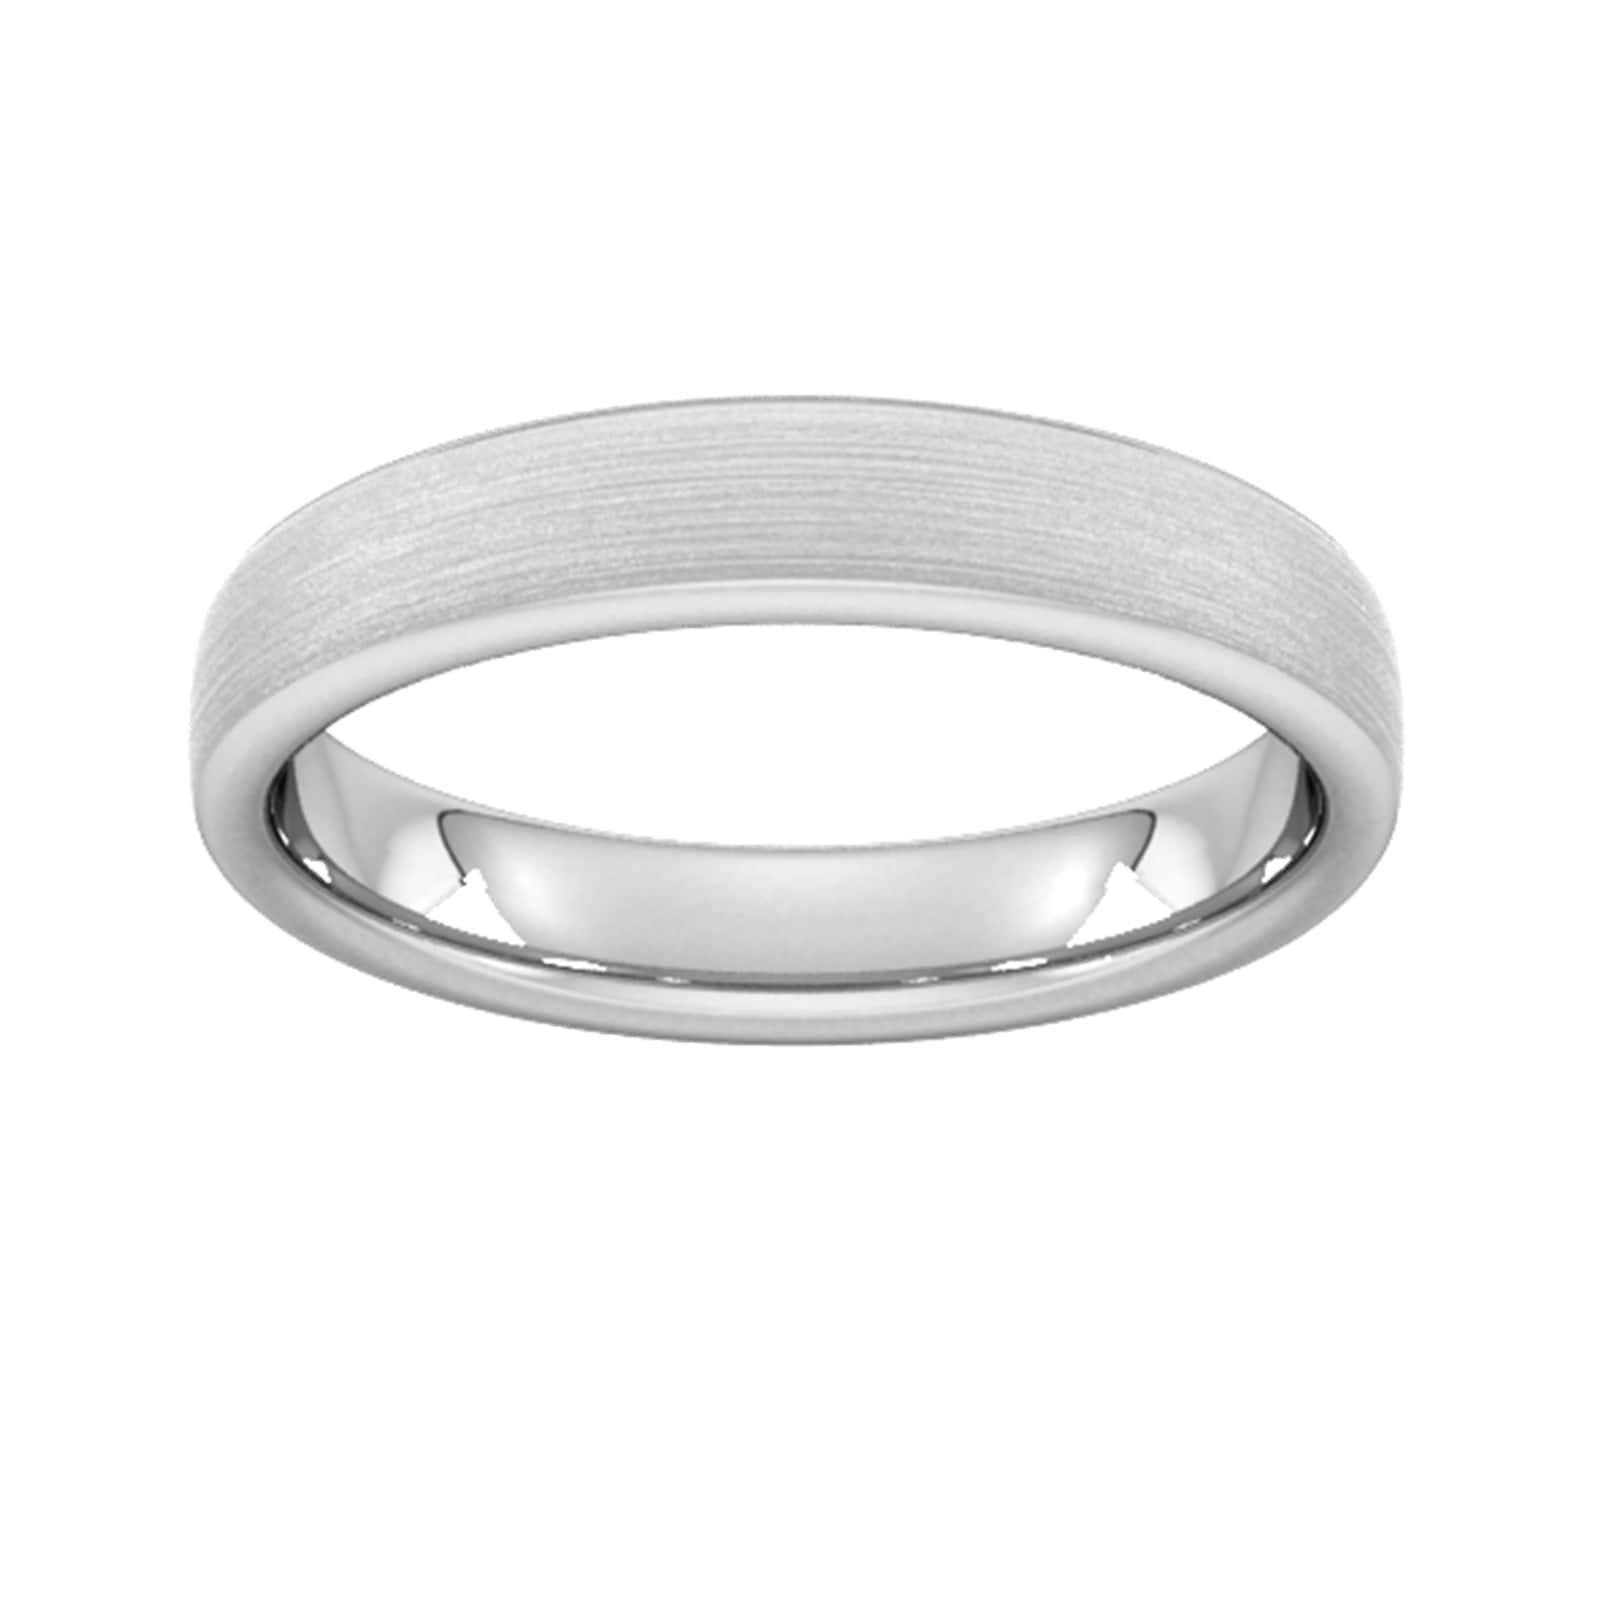 4mm D Shape Standard Matt Finished Wedding Ring In 18 Carat White Gold - Ring Size L